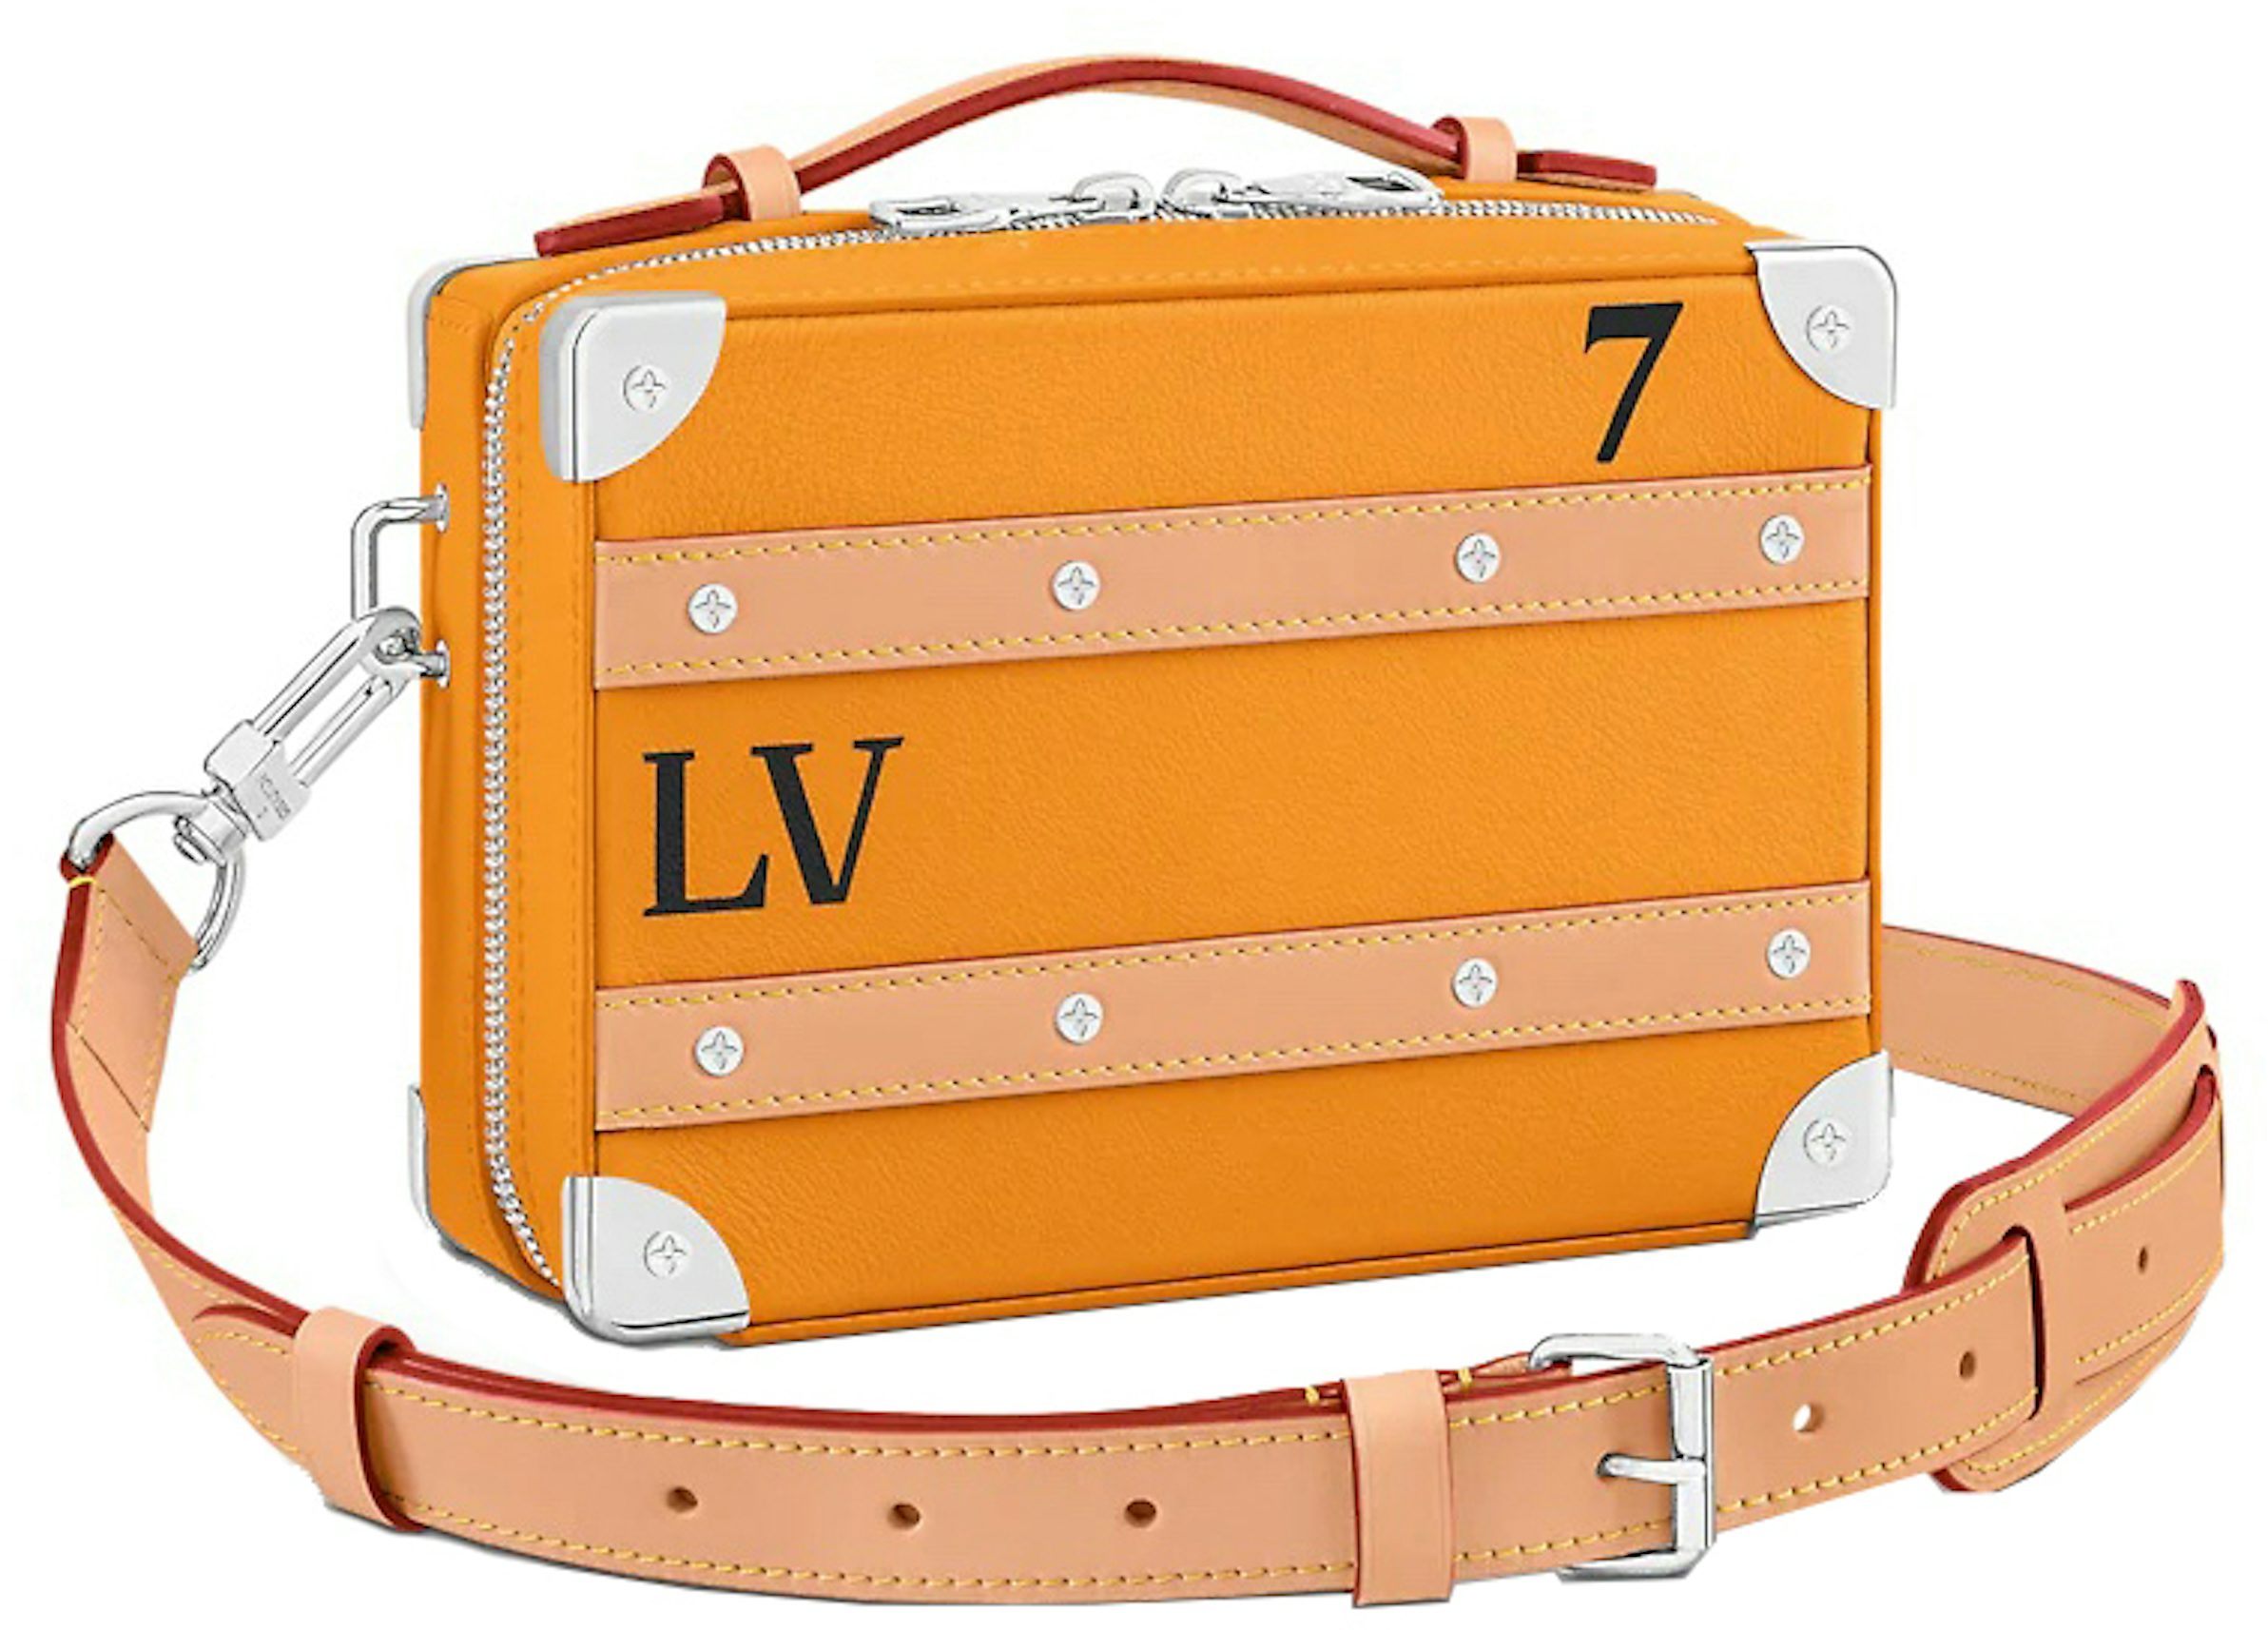 Sell Louis Vuitton Monogram Macassar Soft Trunk Handle Bag - Black/Brown